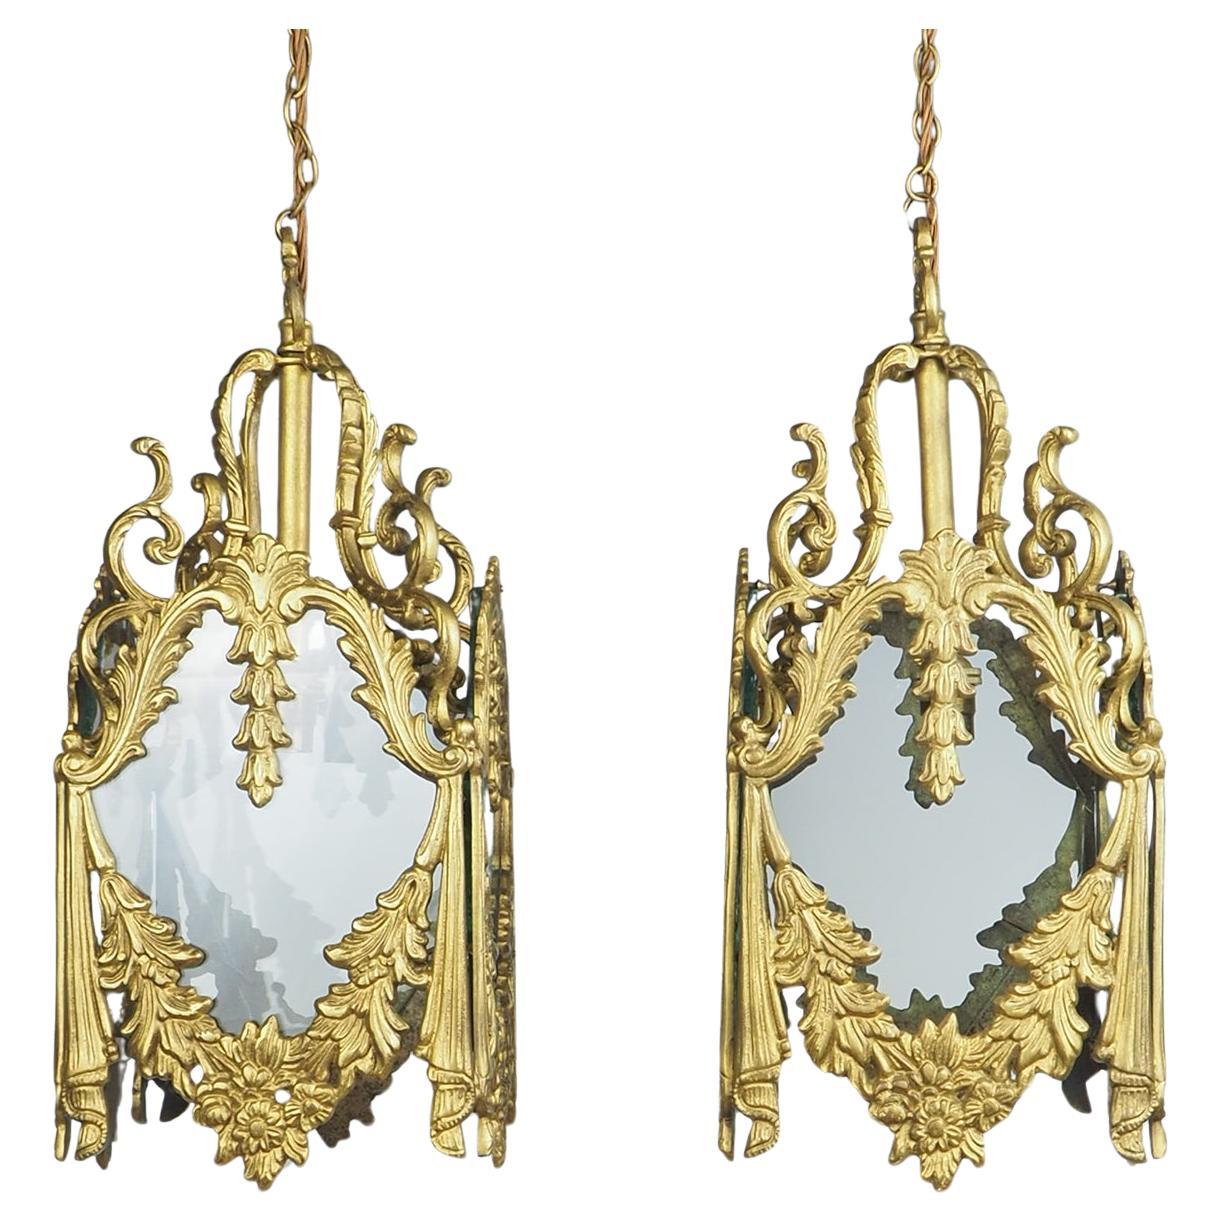 Pair of Decorative French Rococo Gilt Brass Lanterns